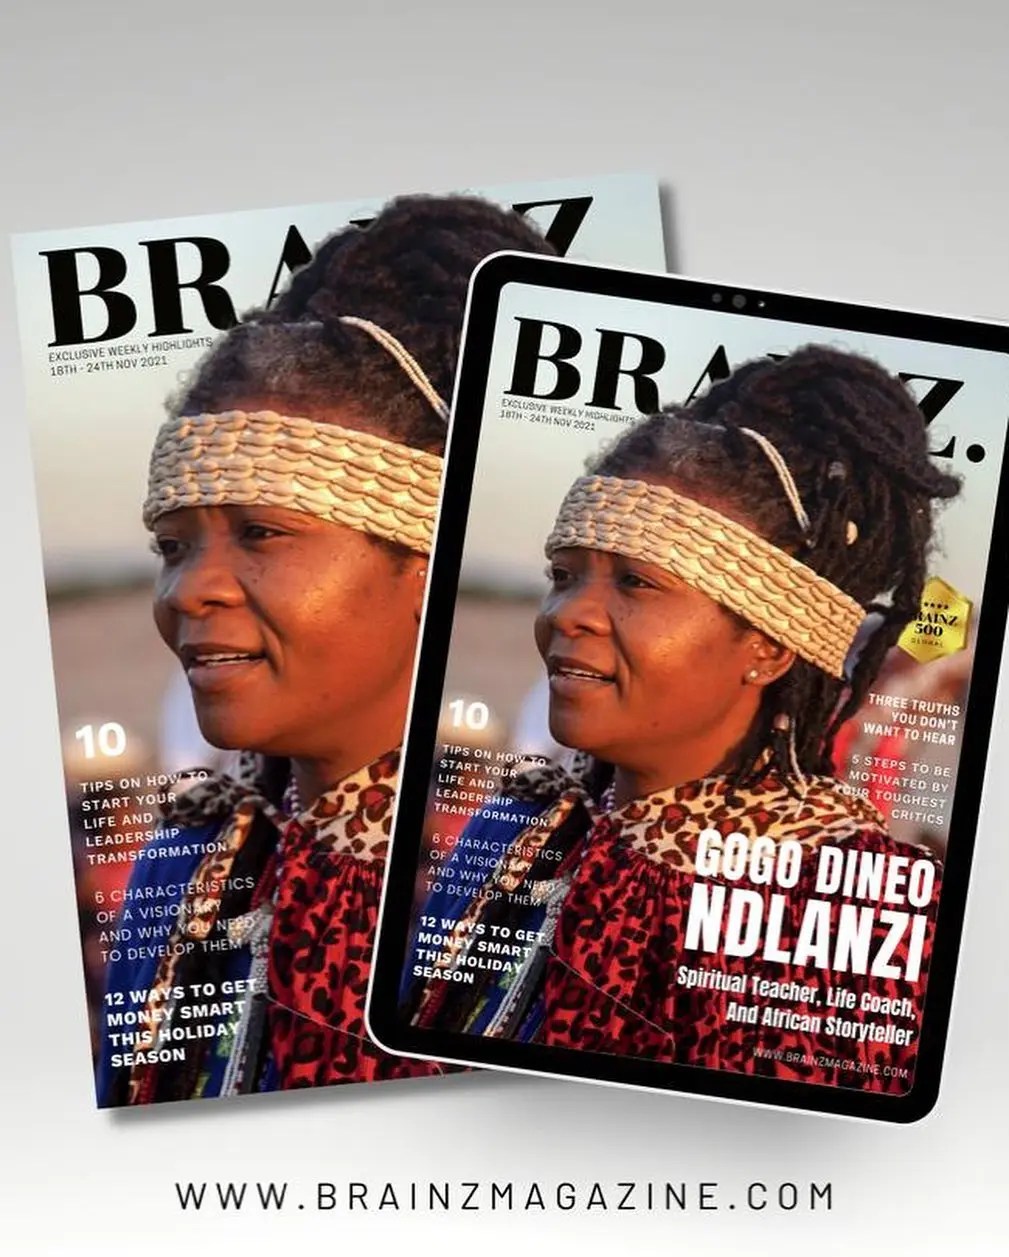 Gogo Dineo graces the cover of Brainz magazine